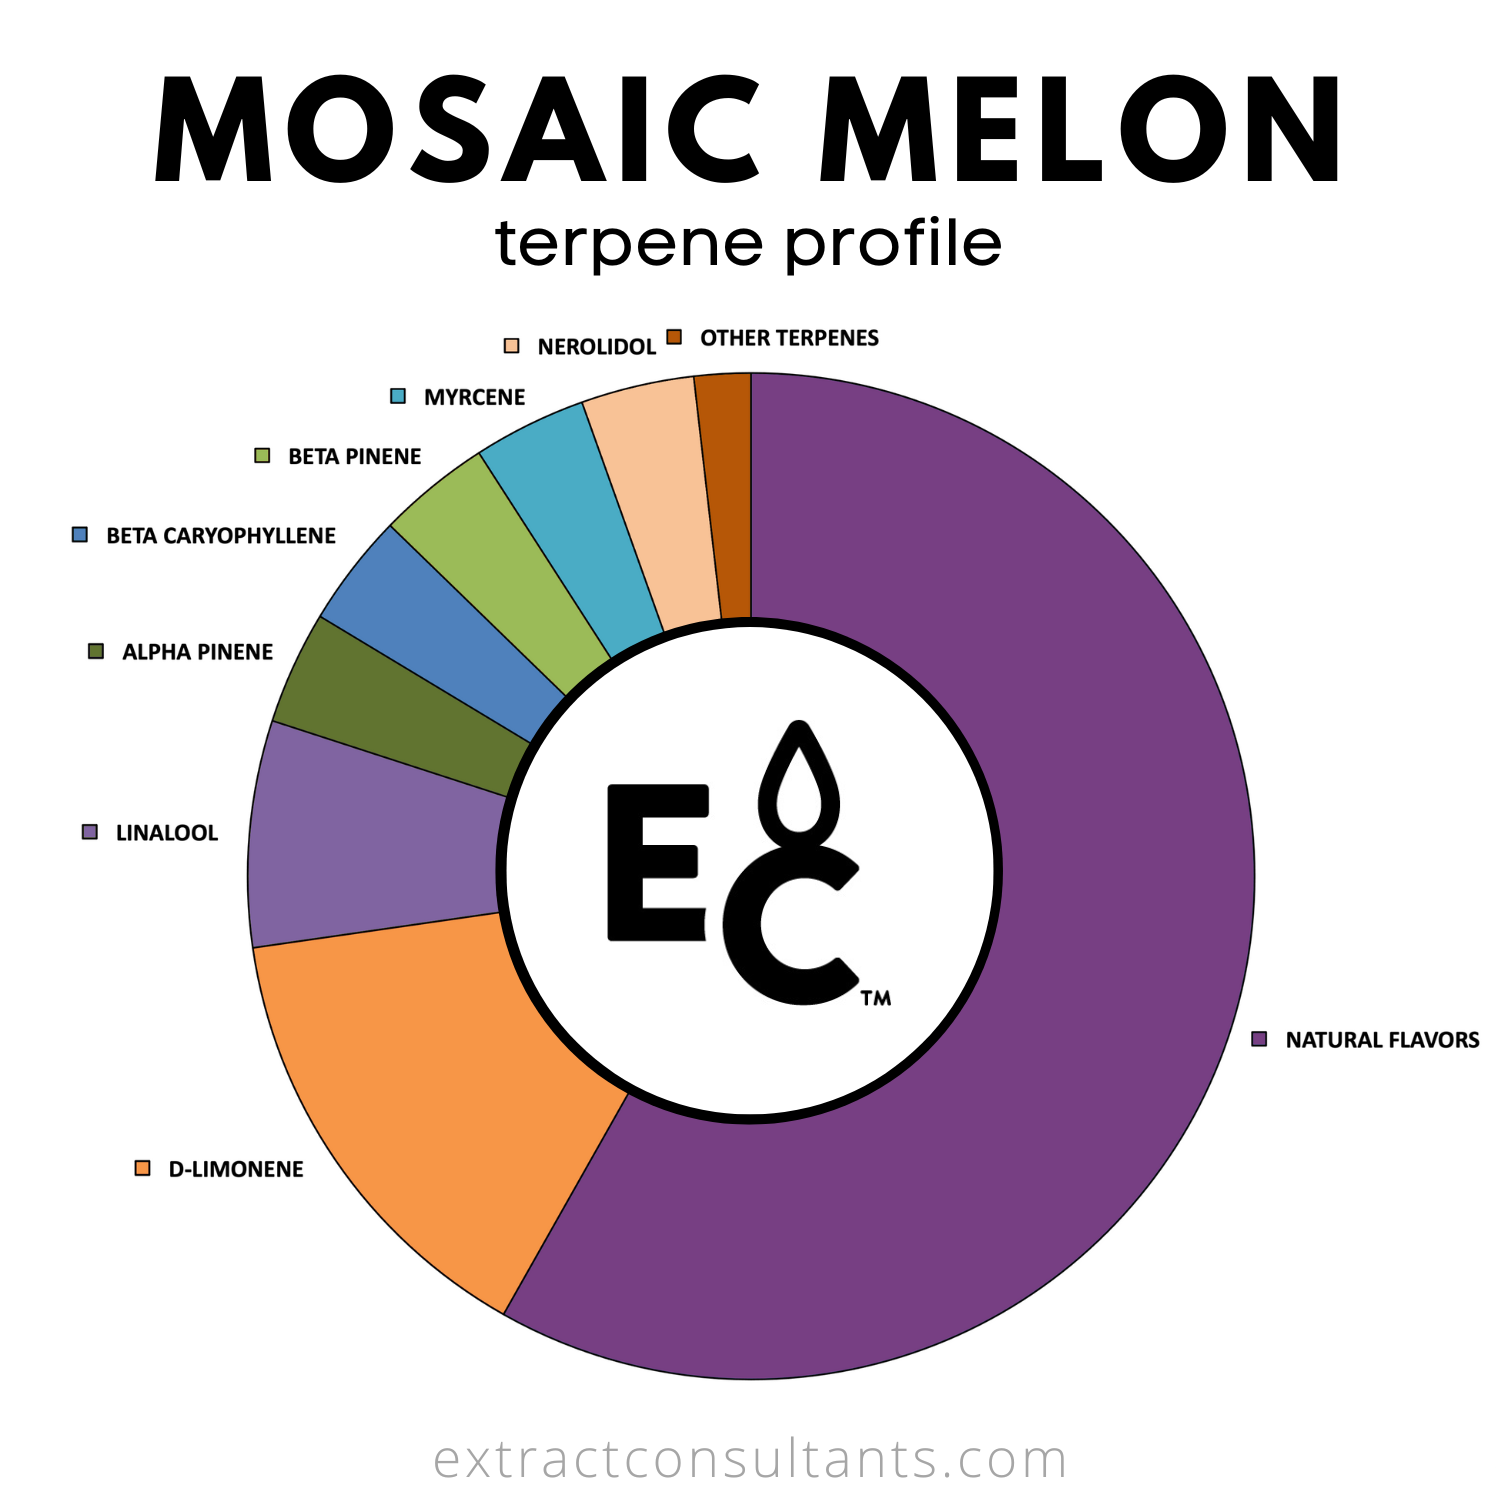 Mosaic Melon TTB Approved Terpene Flavor